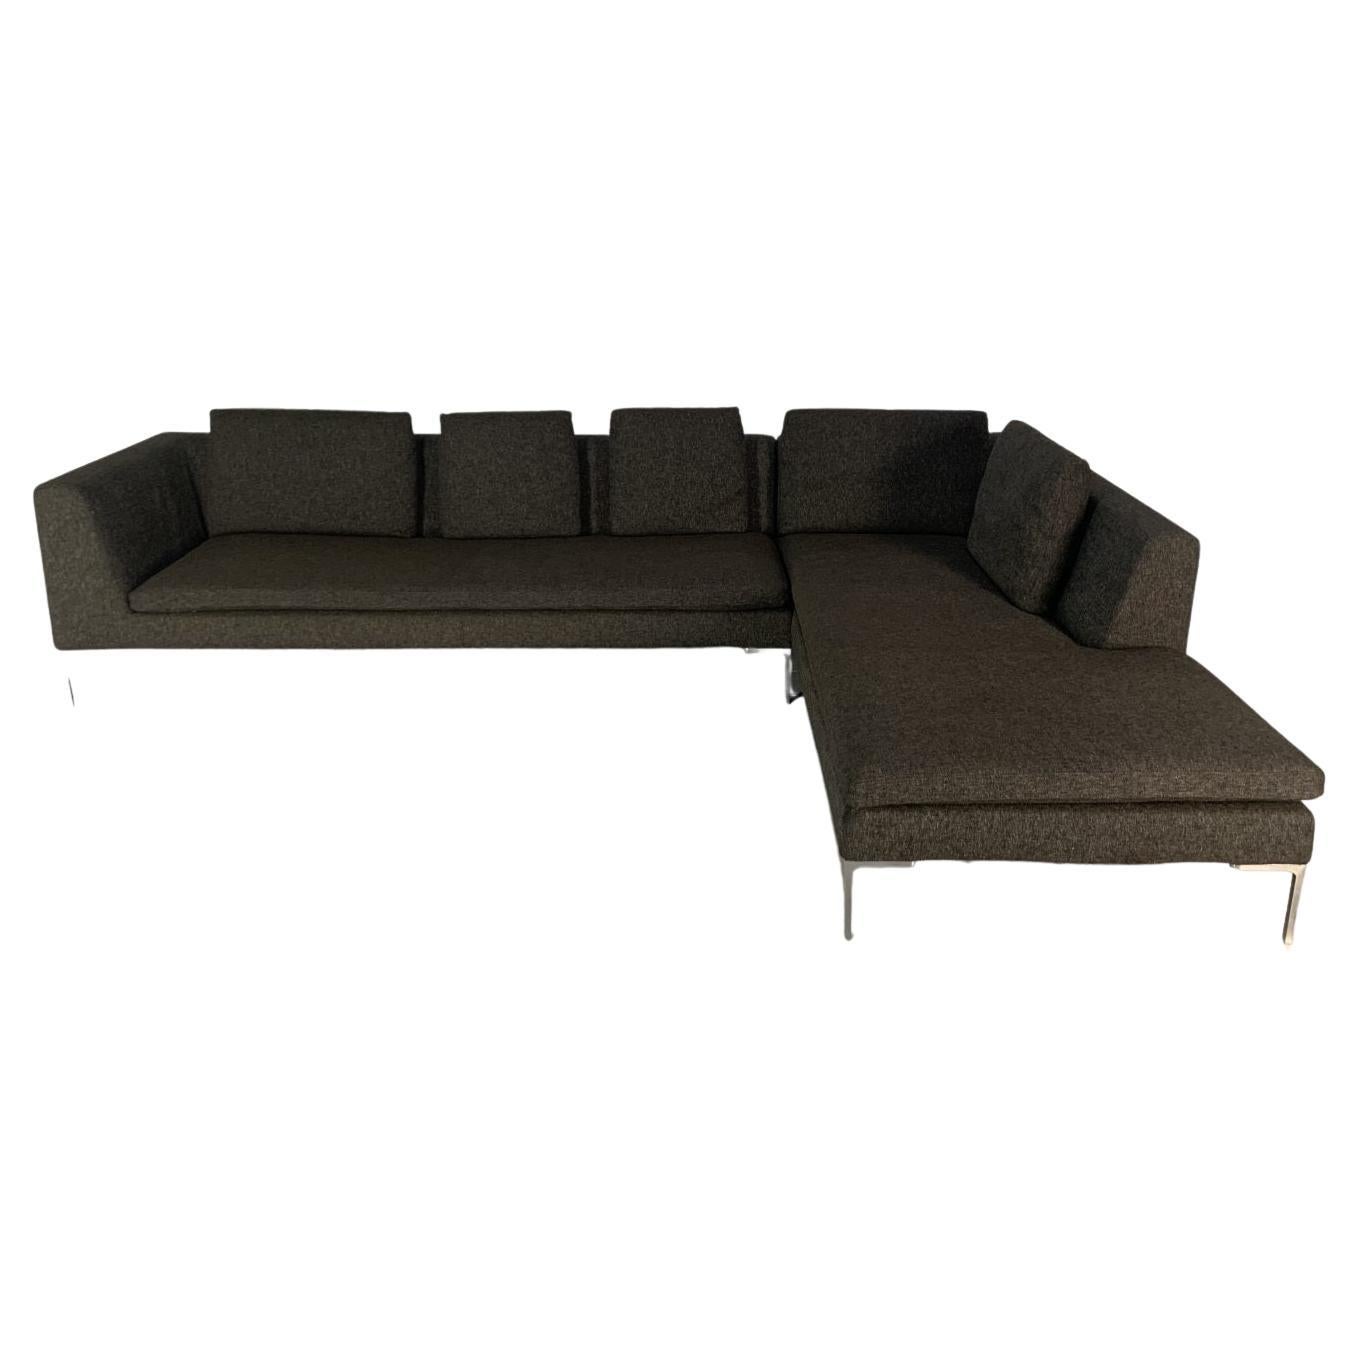 B&B Italia “Charles” L-Shape Sofa, in Dark Grey & Brown Fabric